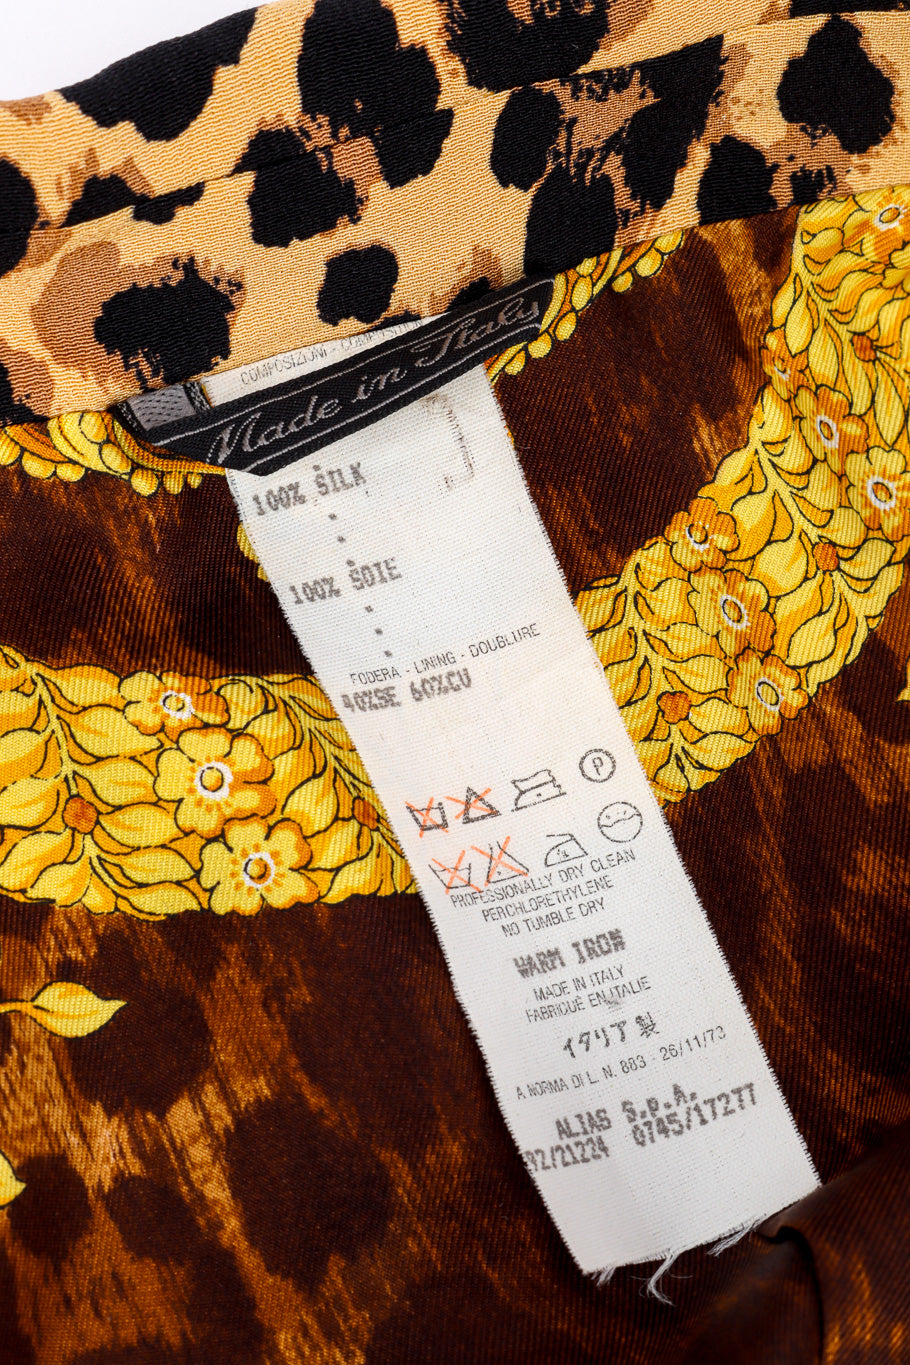 1992 S/S Silk Leopard Print Blazer by Versace fabric tag @recessla